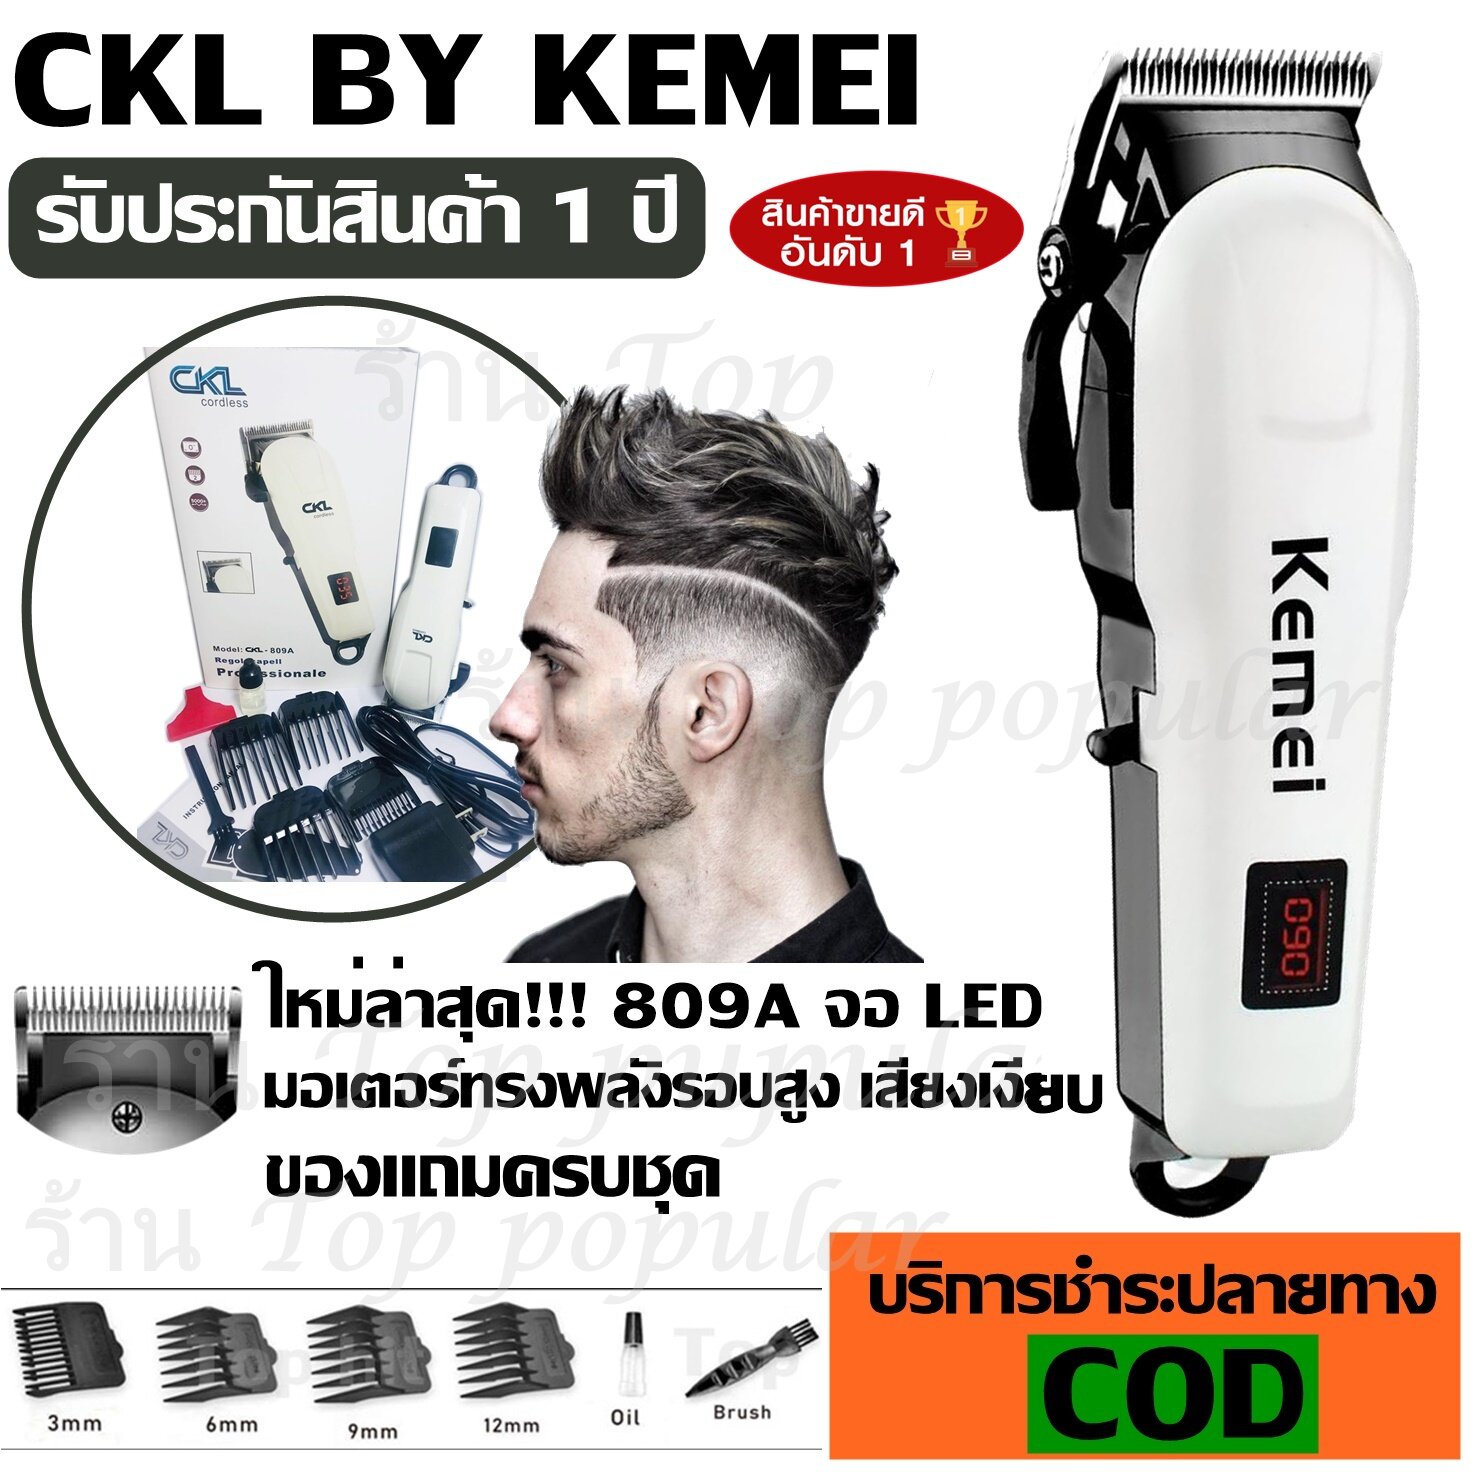 Top Price ค่าส่งถูก พร้อมส่ง !!! ปัตตาเลี่ยนตัดผม แบตตาเลียน CKL CKL809A CKL-809A / Kemei Km809A KM809A แบตตาเลียนตัดผมไร้สาย ปัตตาเลี่ยนตัดผมไร้สาย Professional Hair Clipper รับประกันสินค้า